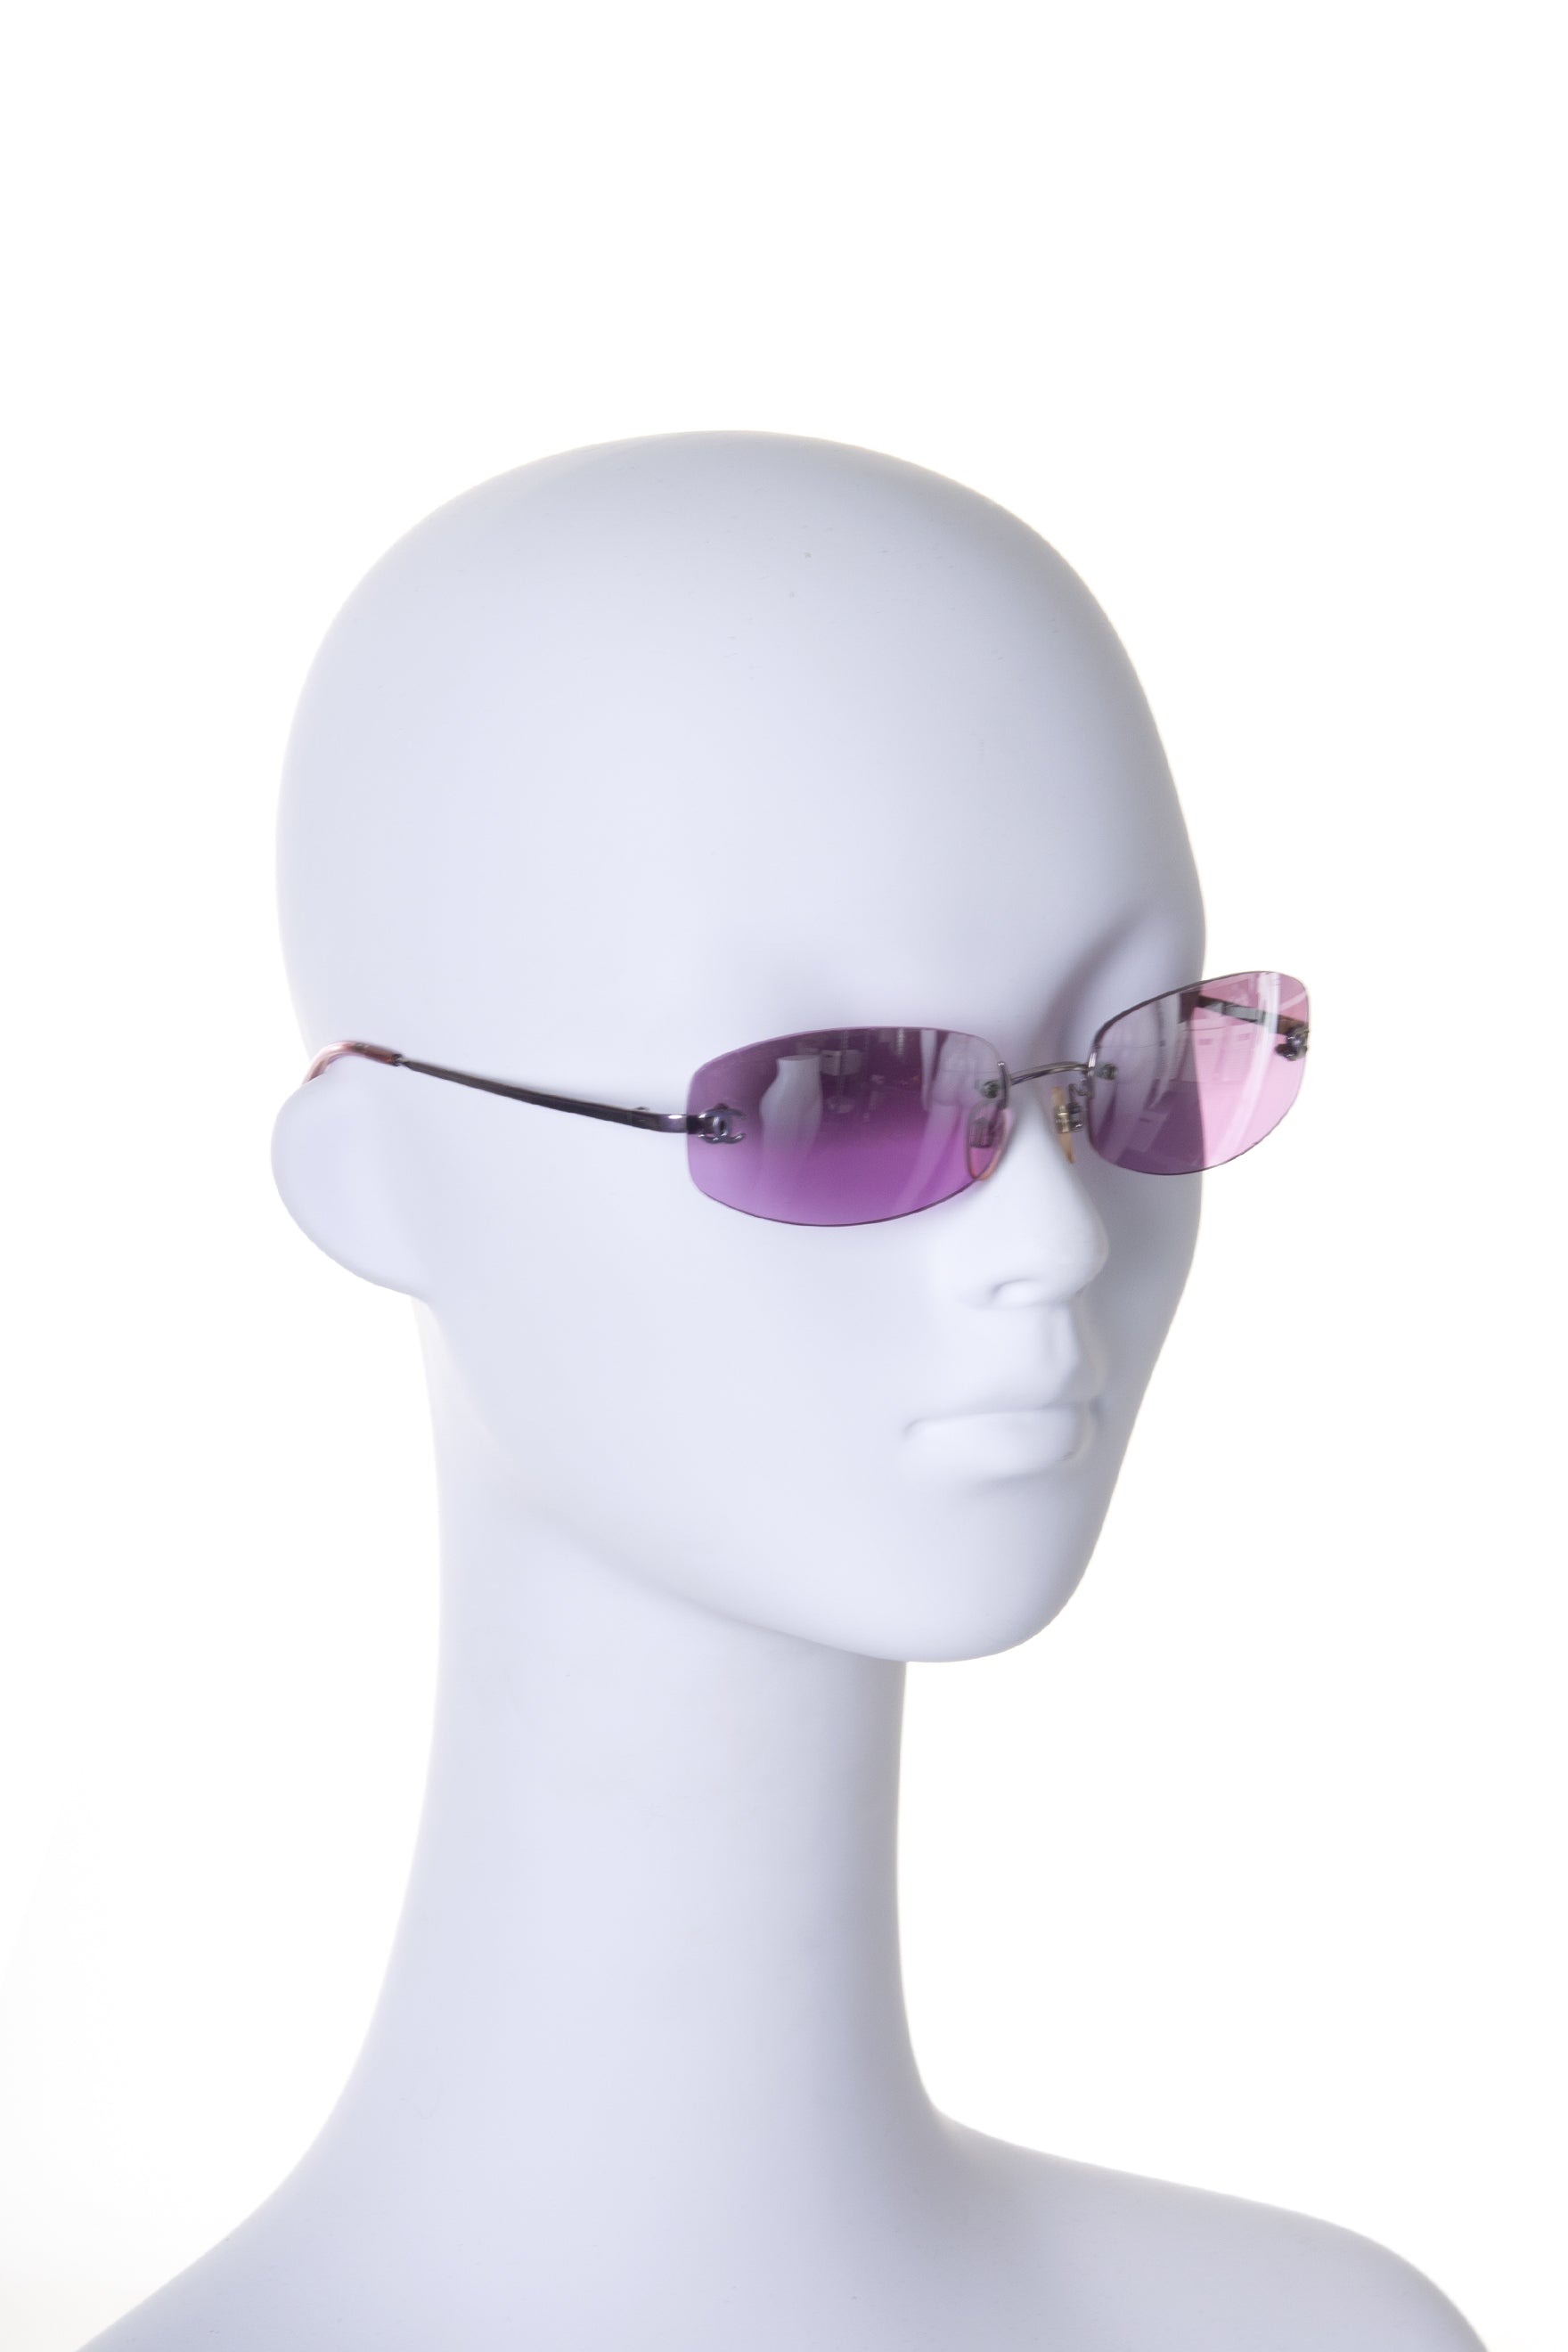 Chanel Sunglasses Authentic Chanel Rimless Oval Sunglasses 